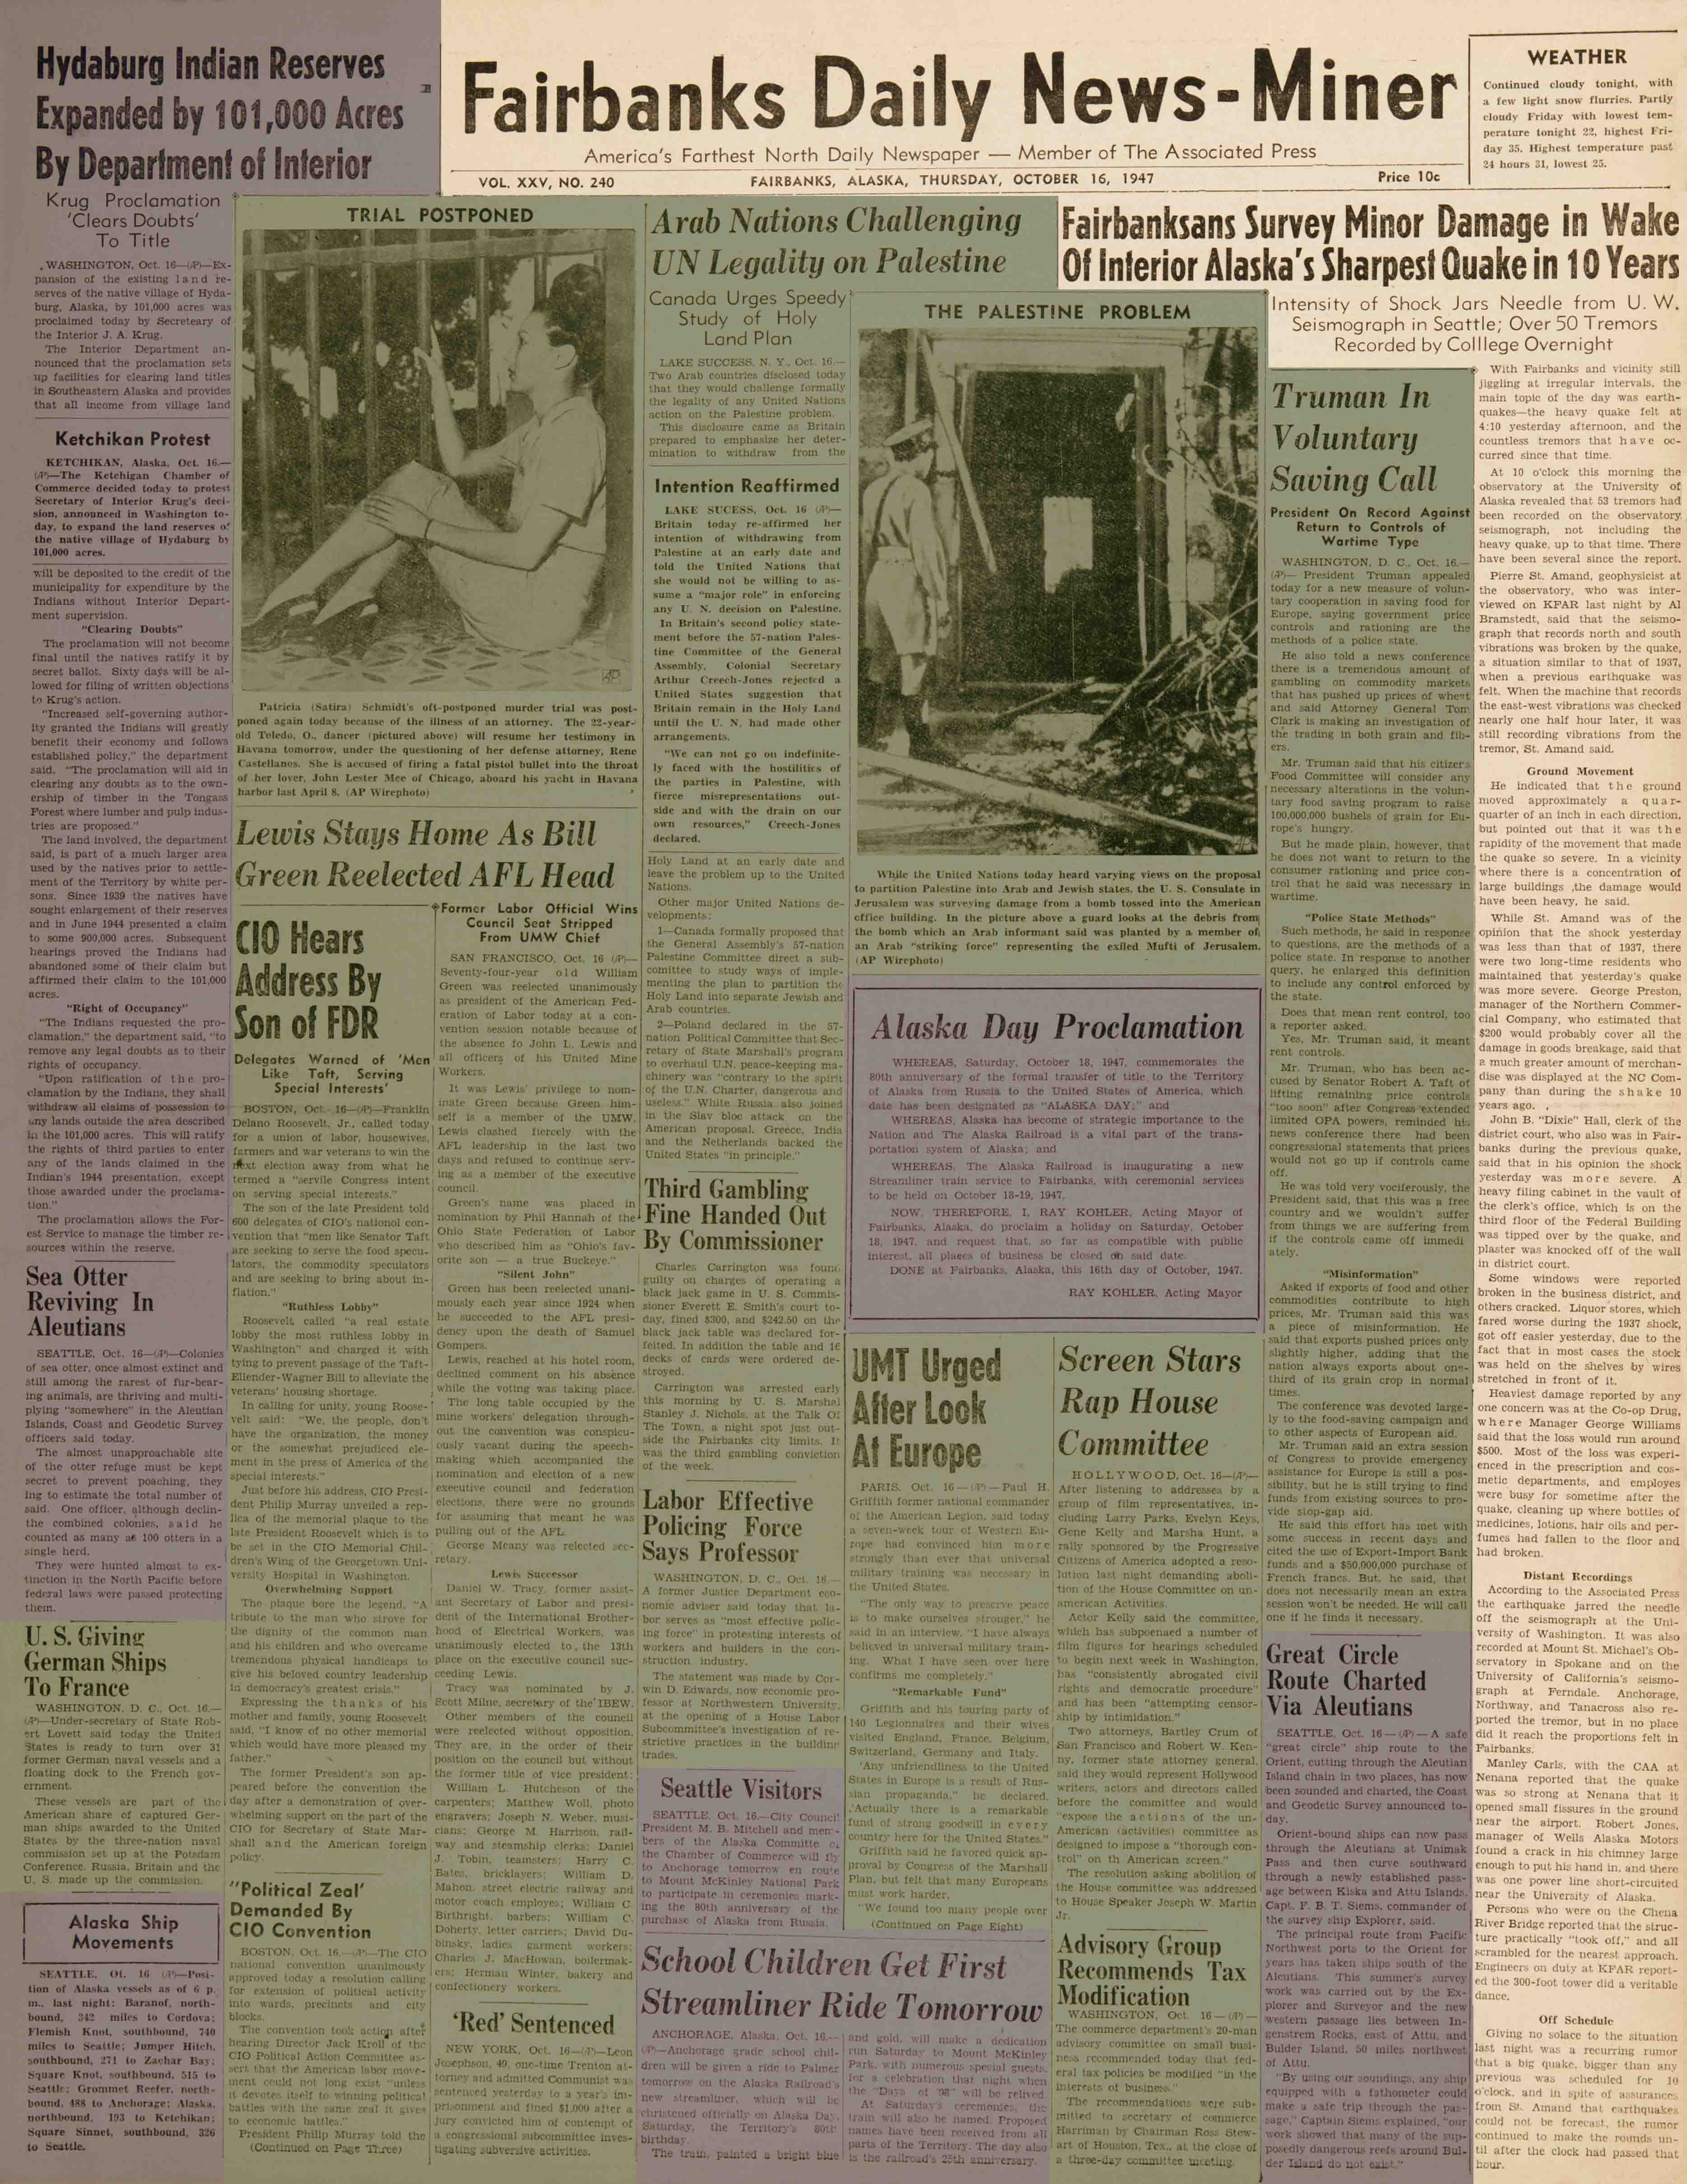 1947 October 16, Fairbanks Daily News-Miner (pg 1)